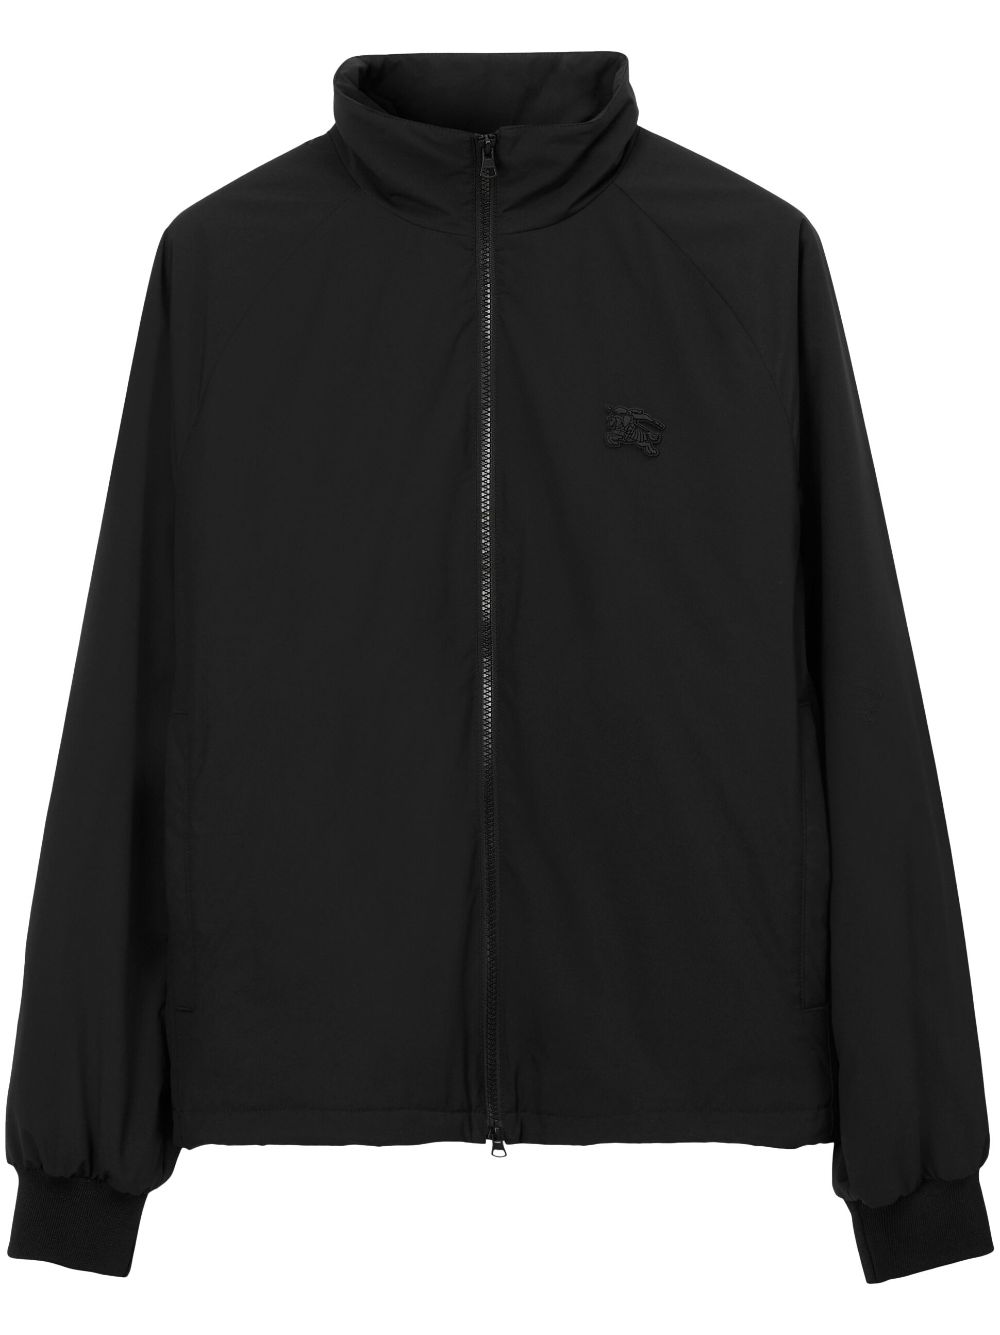 Burberry EKD-logo zip-up jacket - Black